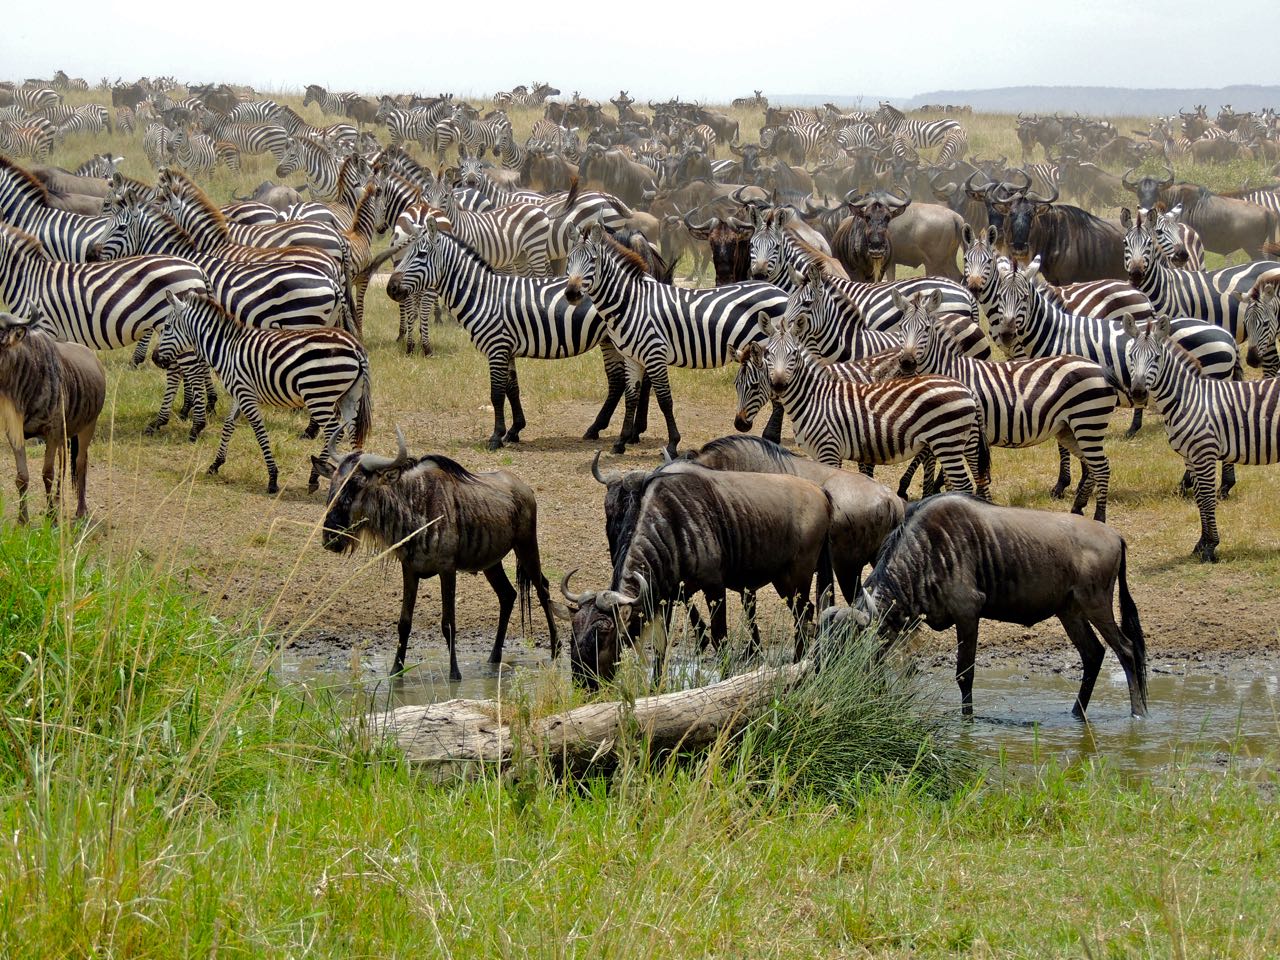 Plains Zebras and Wildebeests